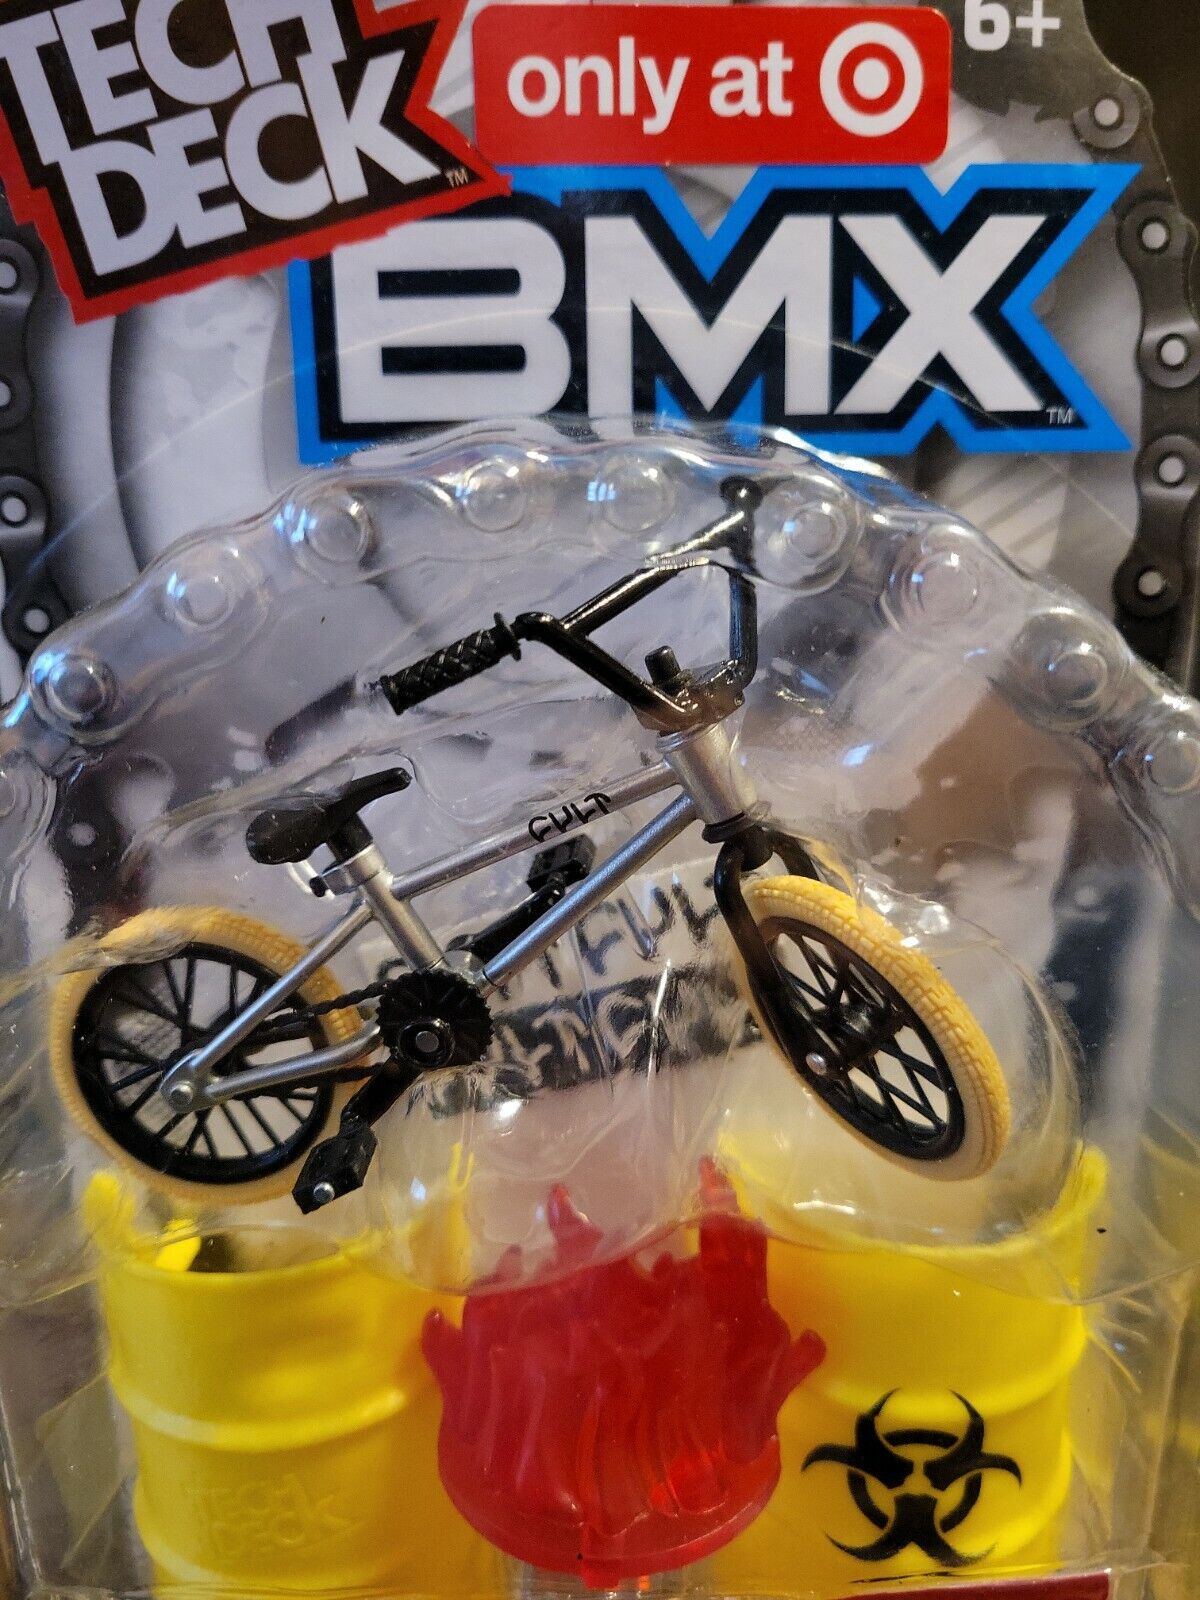 Tech Deck BMX Finger Bike-Replica Bike Real Metal Frame, Moveable Parts